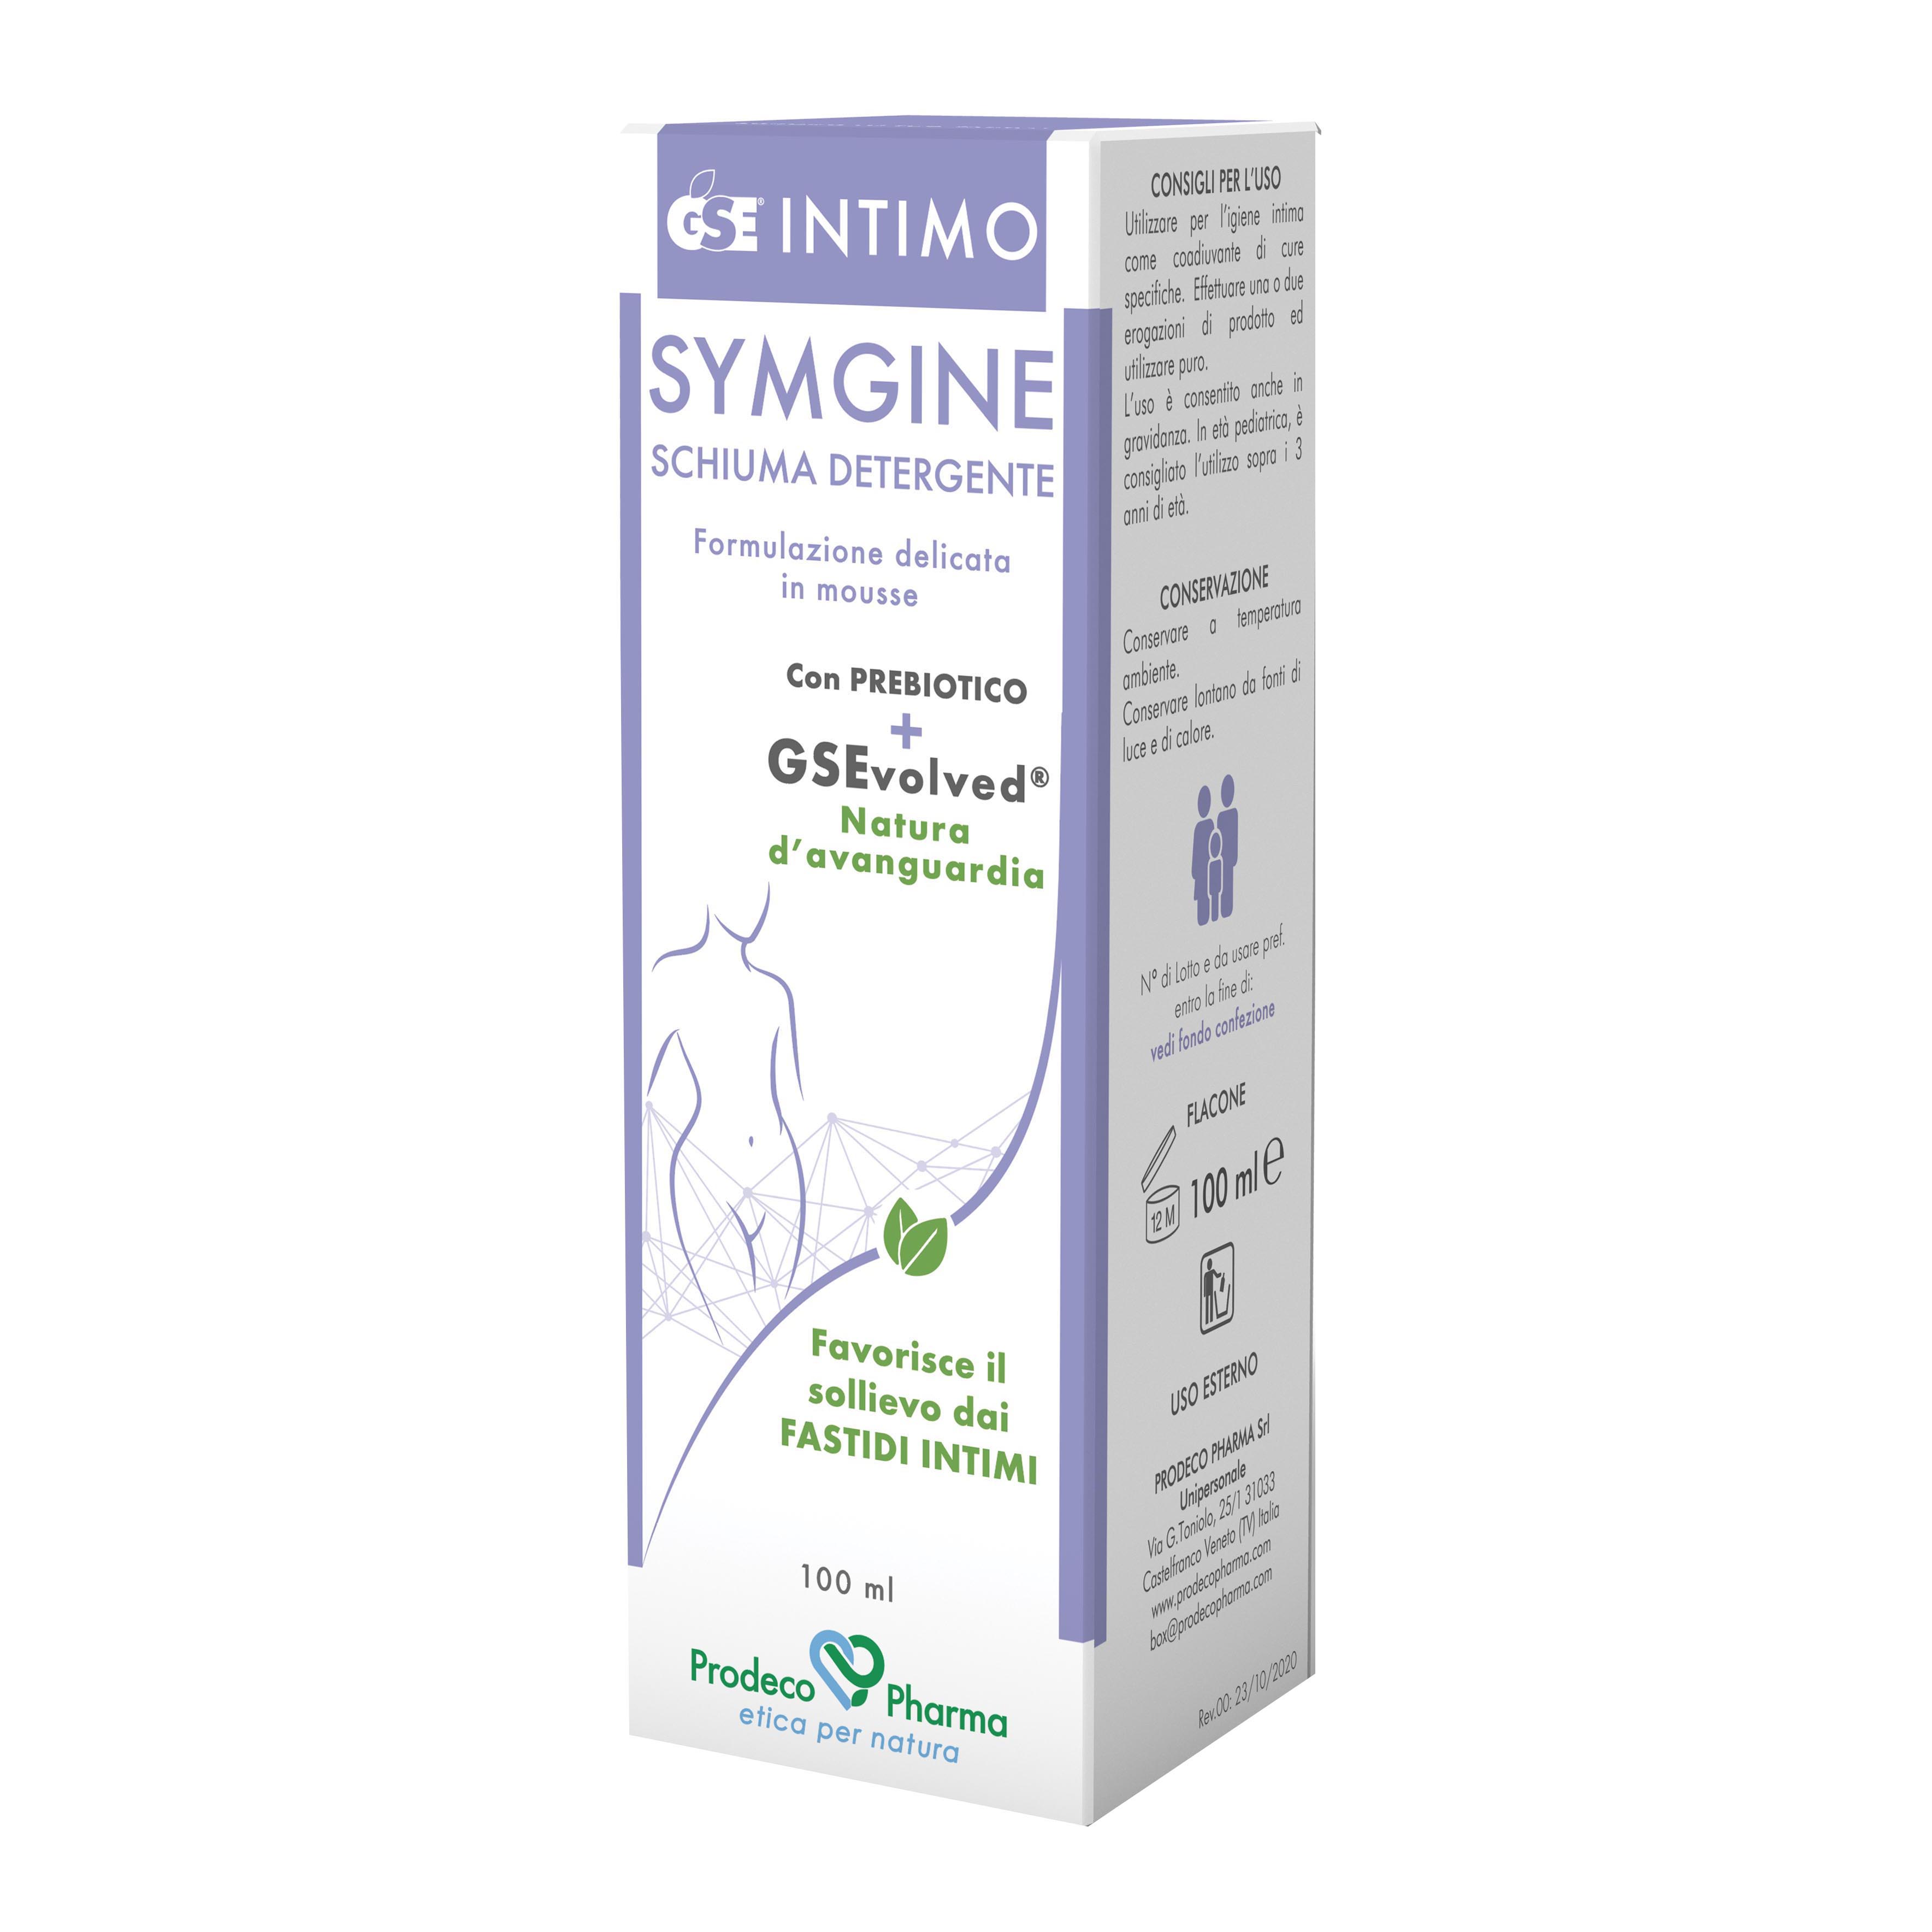 GSE intimo symgine schiuma detergente 100 ml